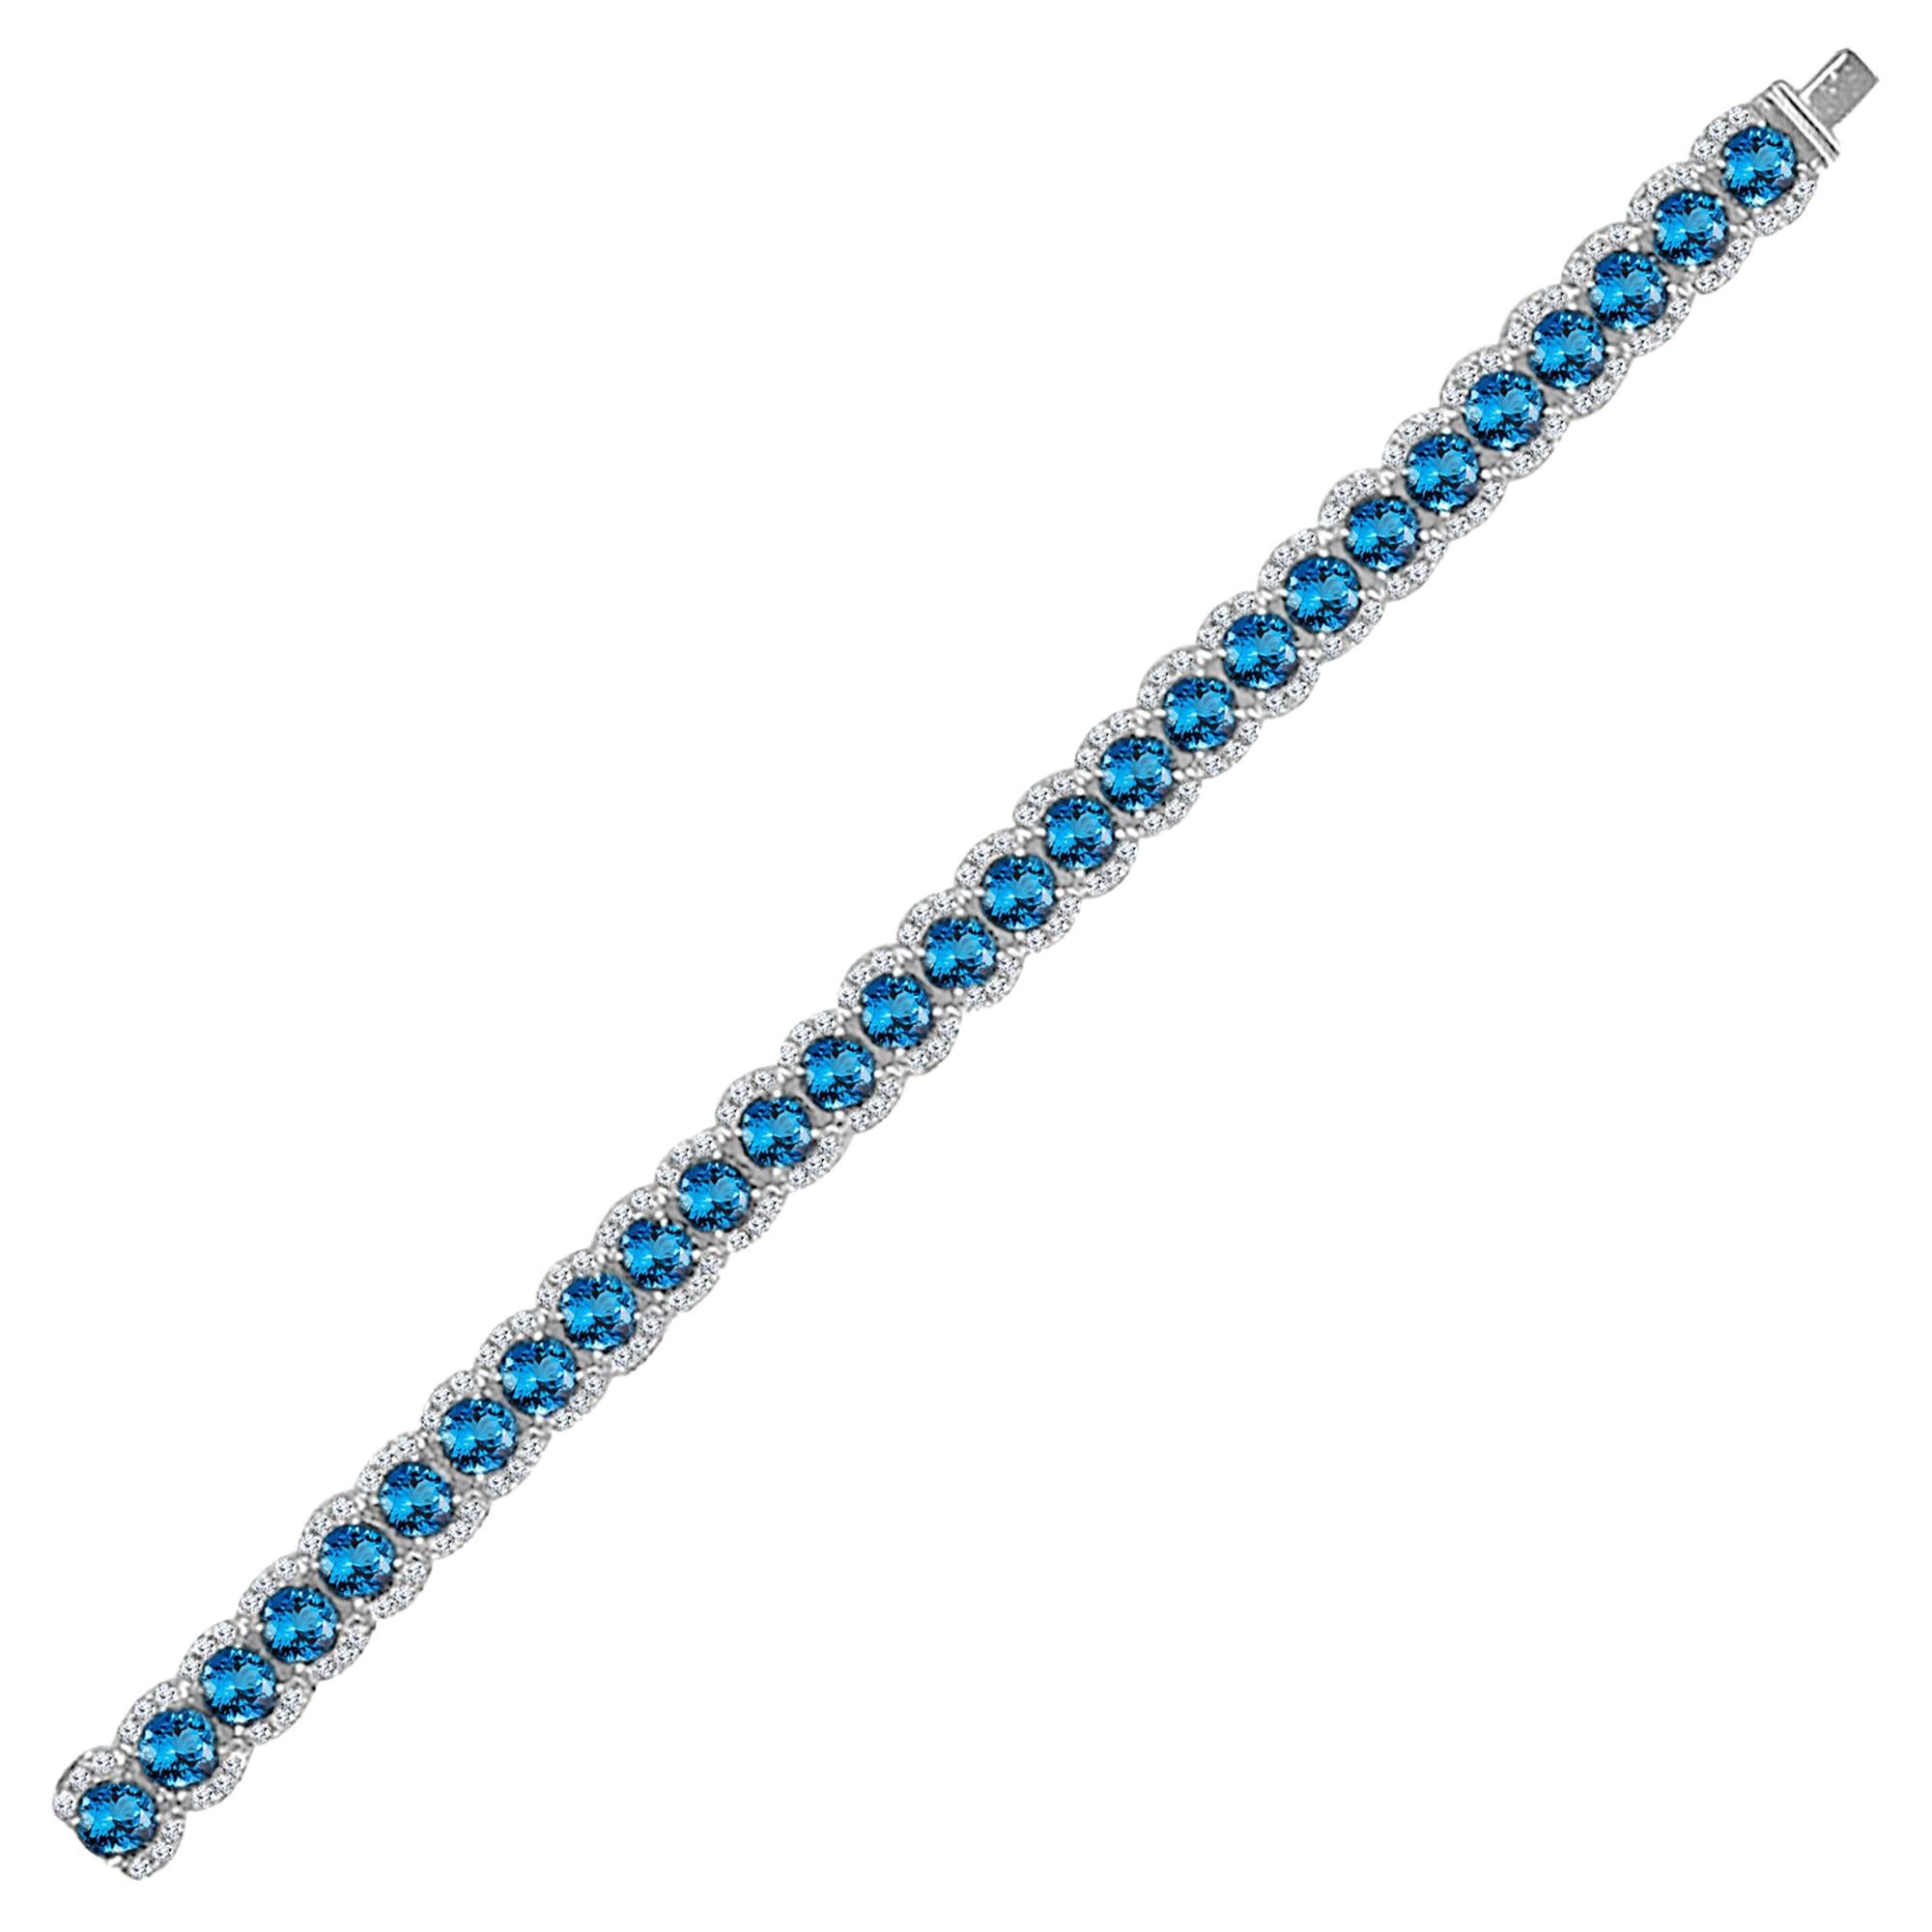 DiamondTown 31.33 Carat Step Cut Blue Topaz and 3.1 Carat White Diamond Bracelet